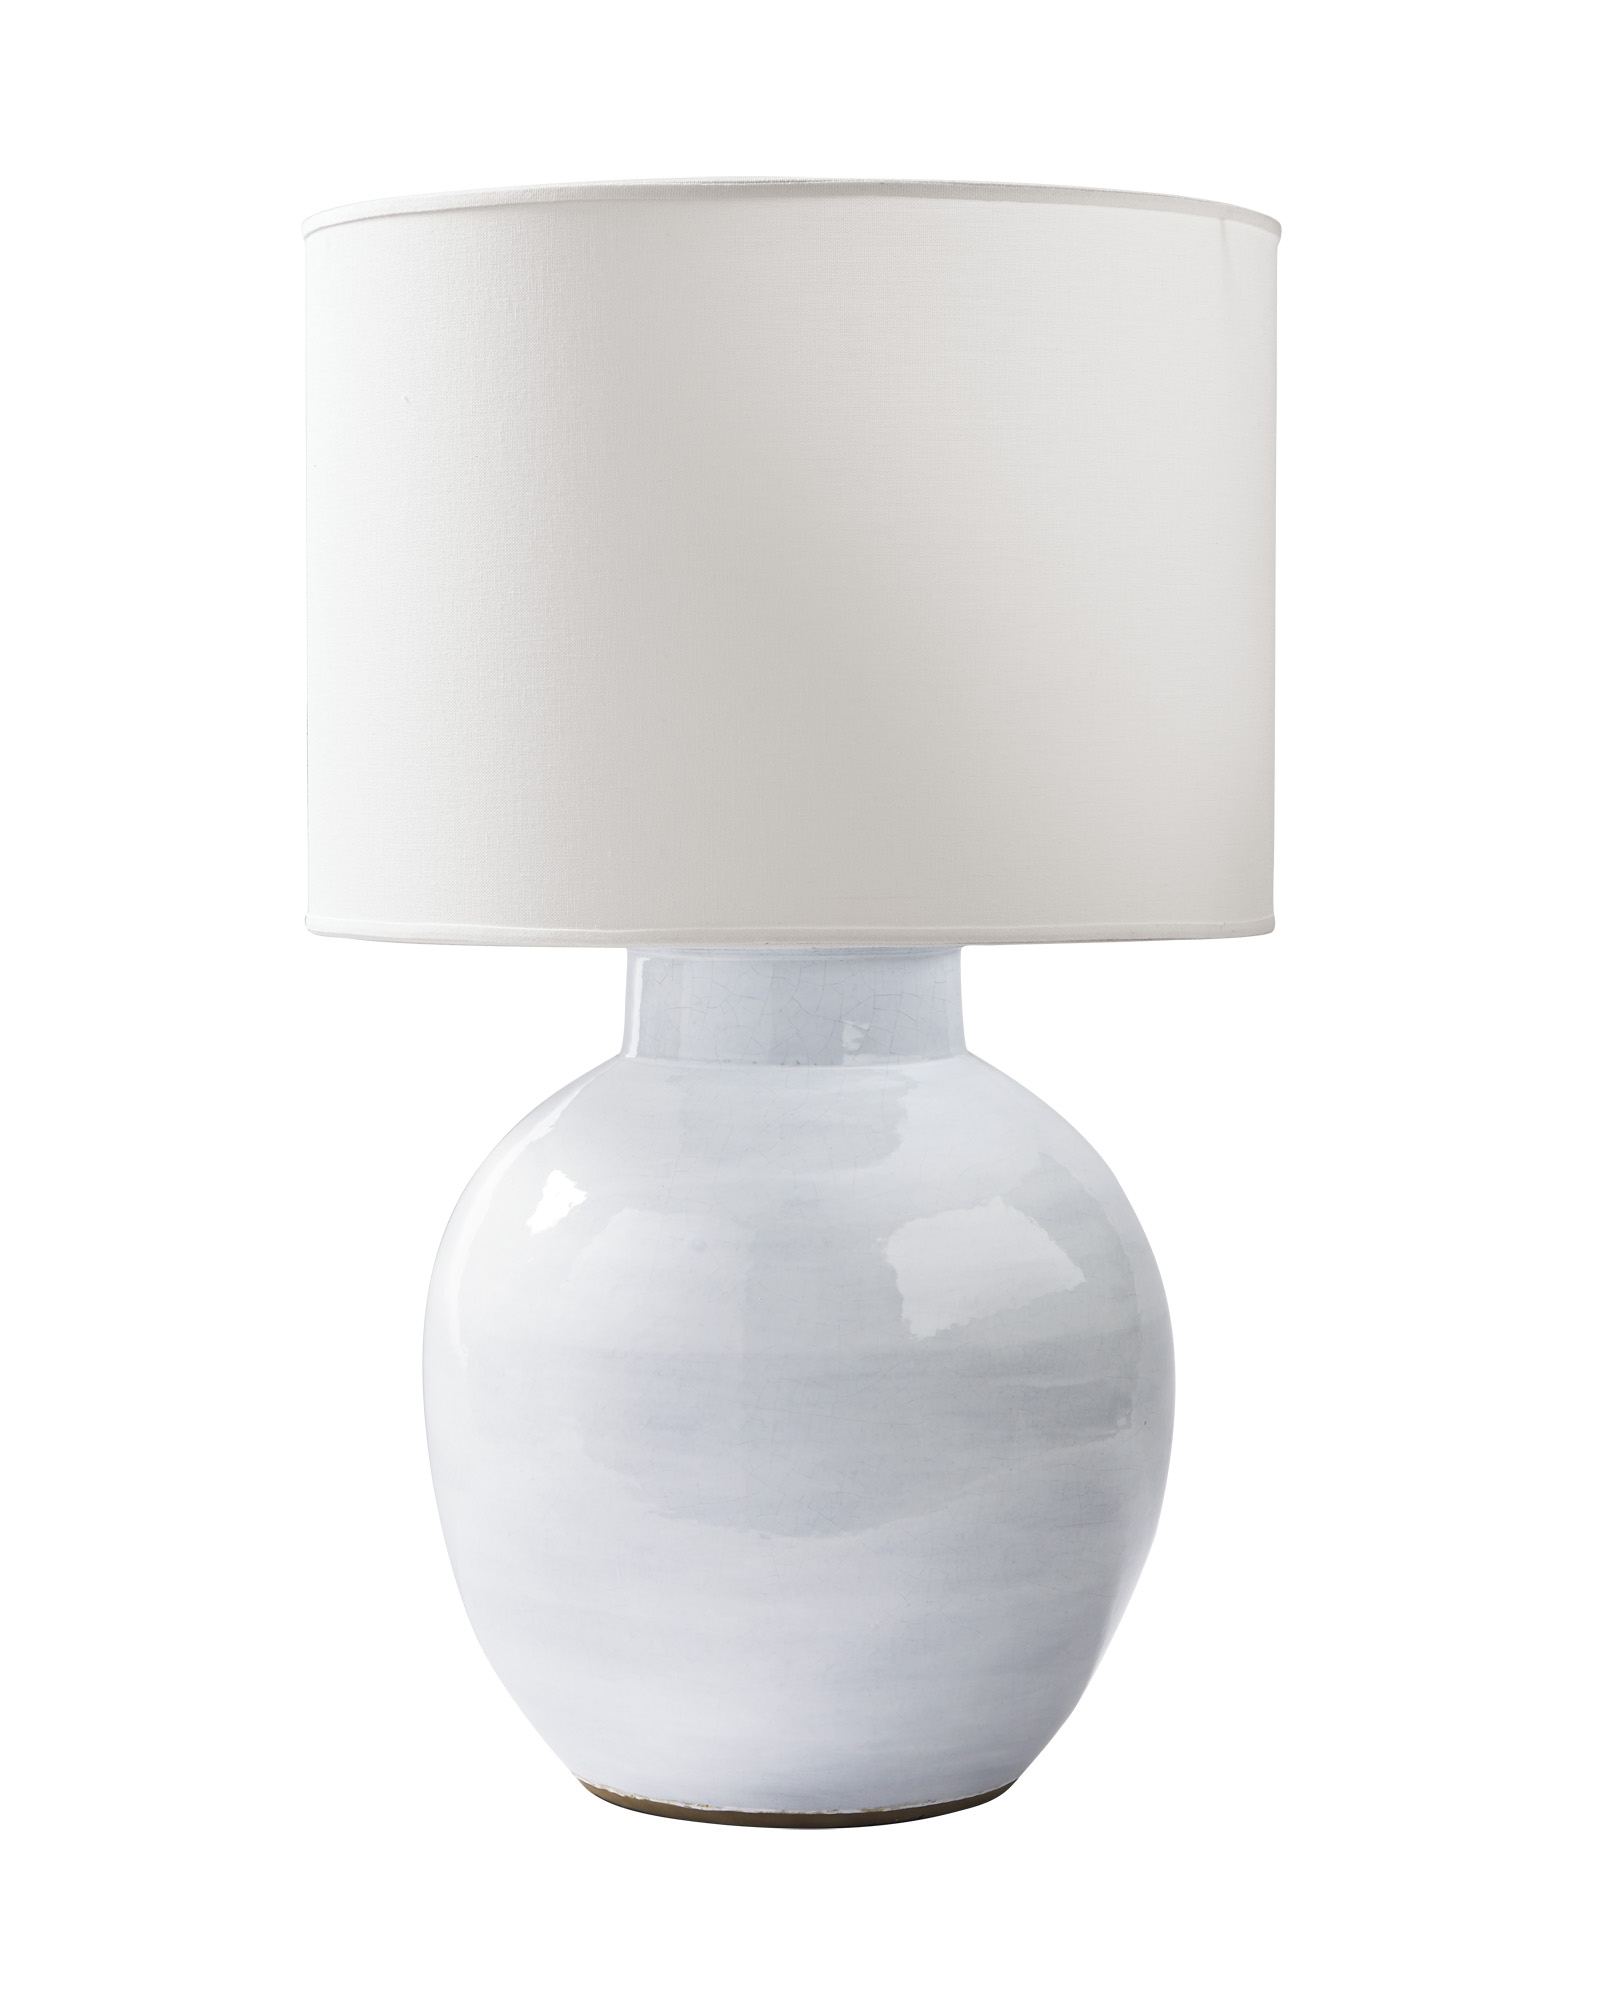 Morris Table Lamp - White - Image 0